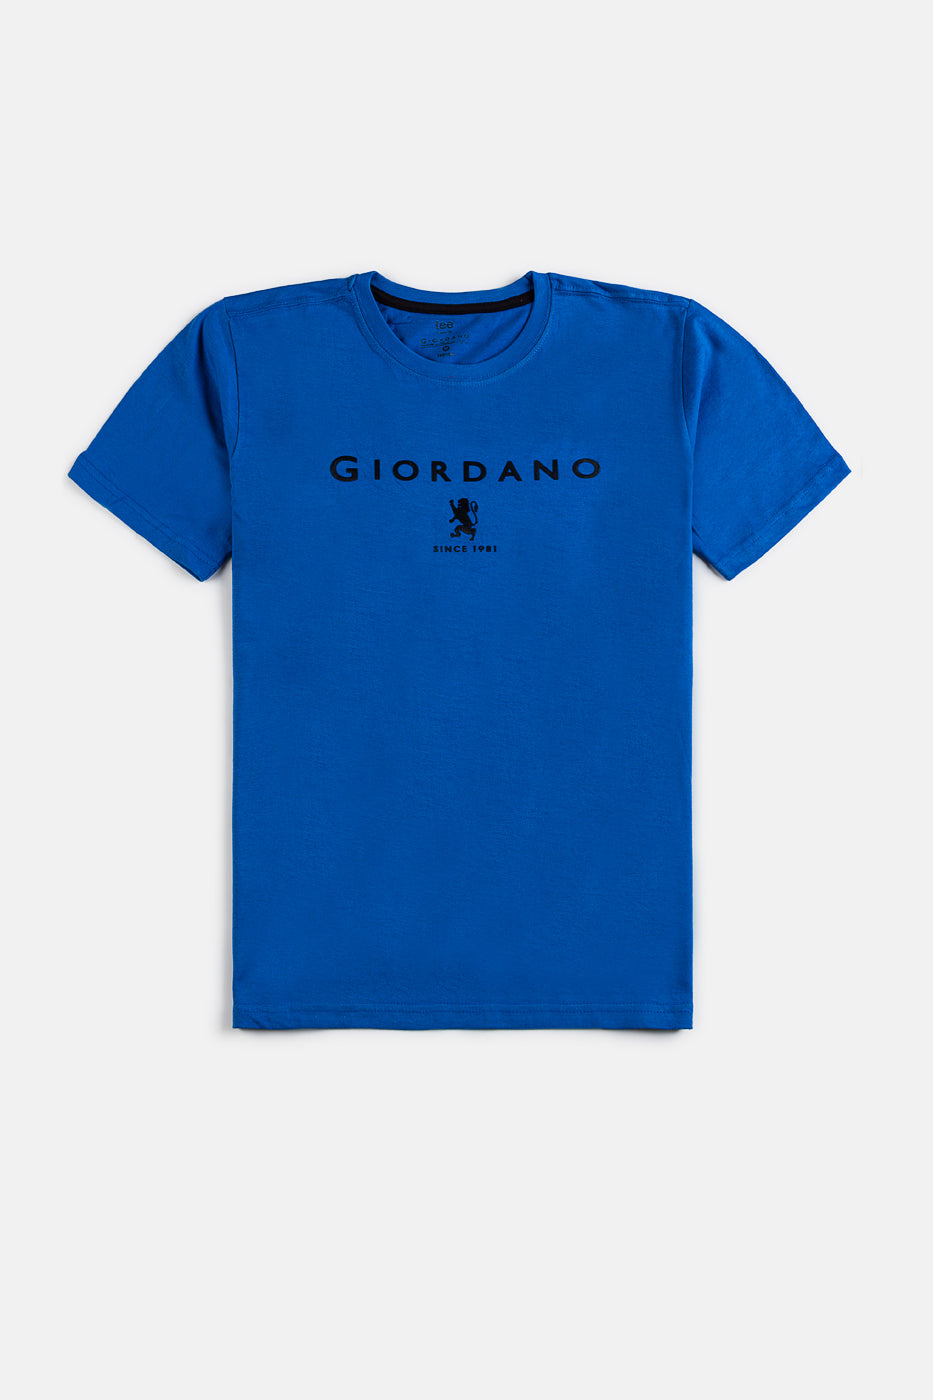 Giordano Premium Cotton Print T Shirt - Deep Blue